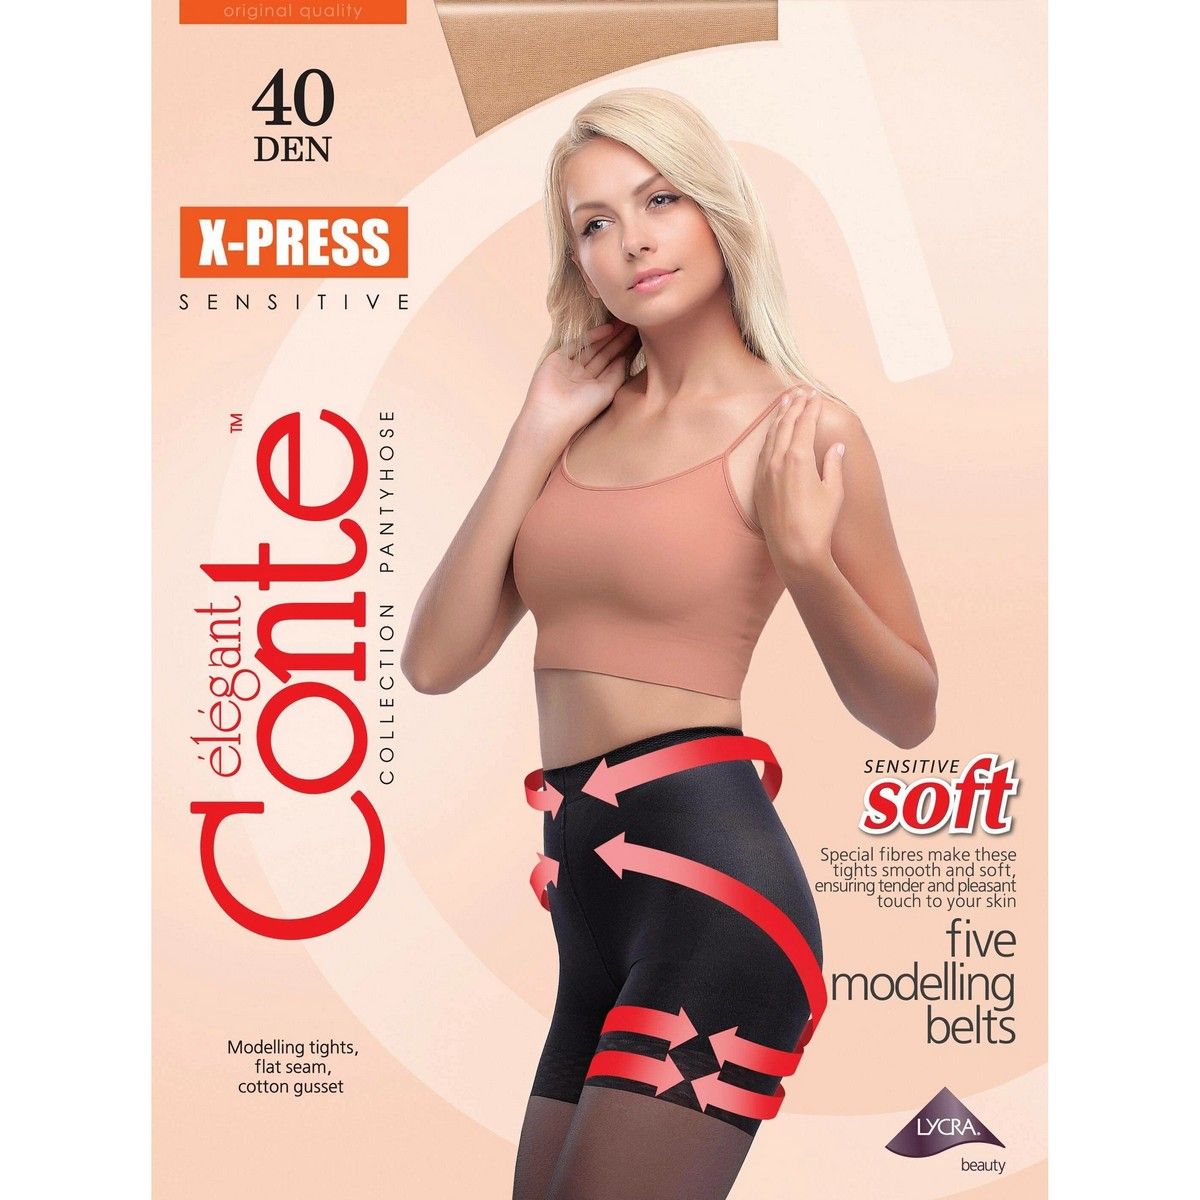 Conte x-Press 40 колготки женские